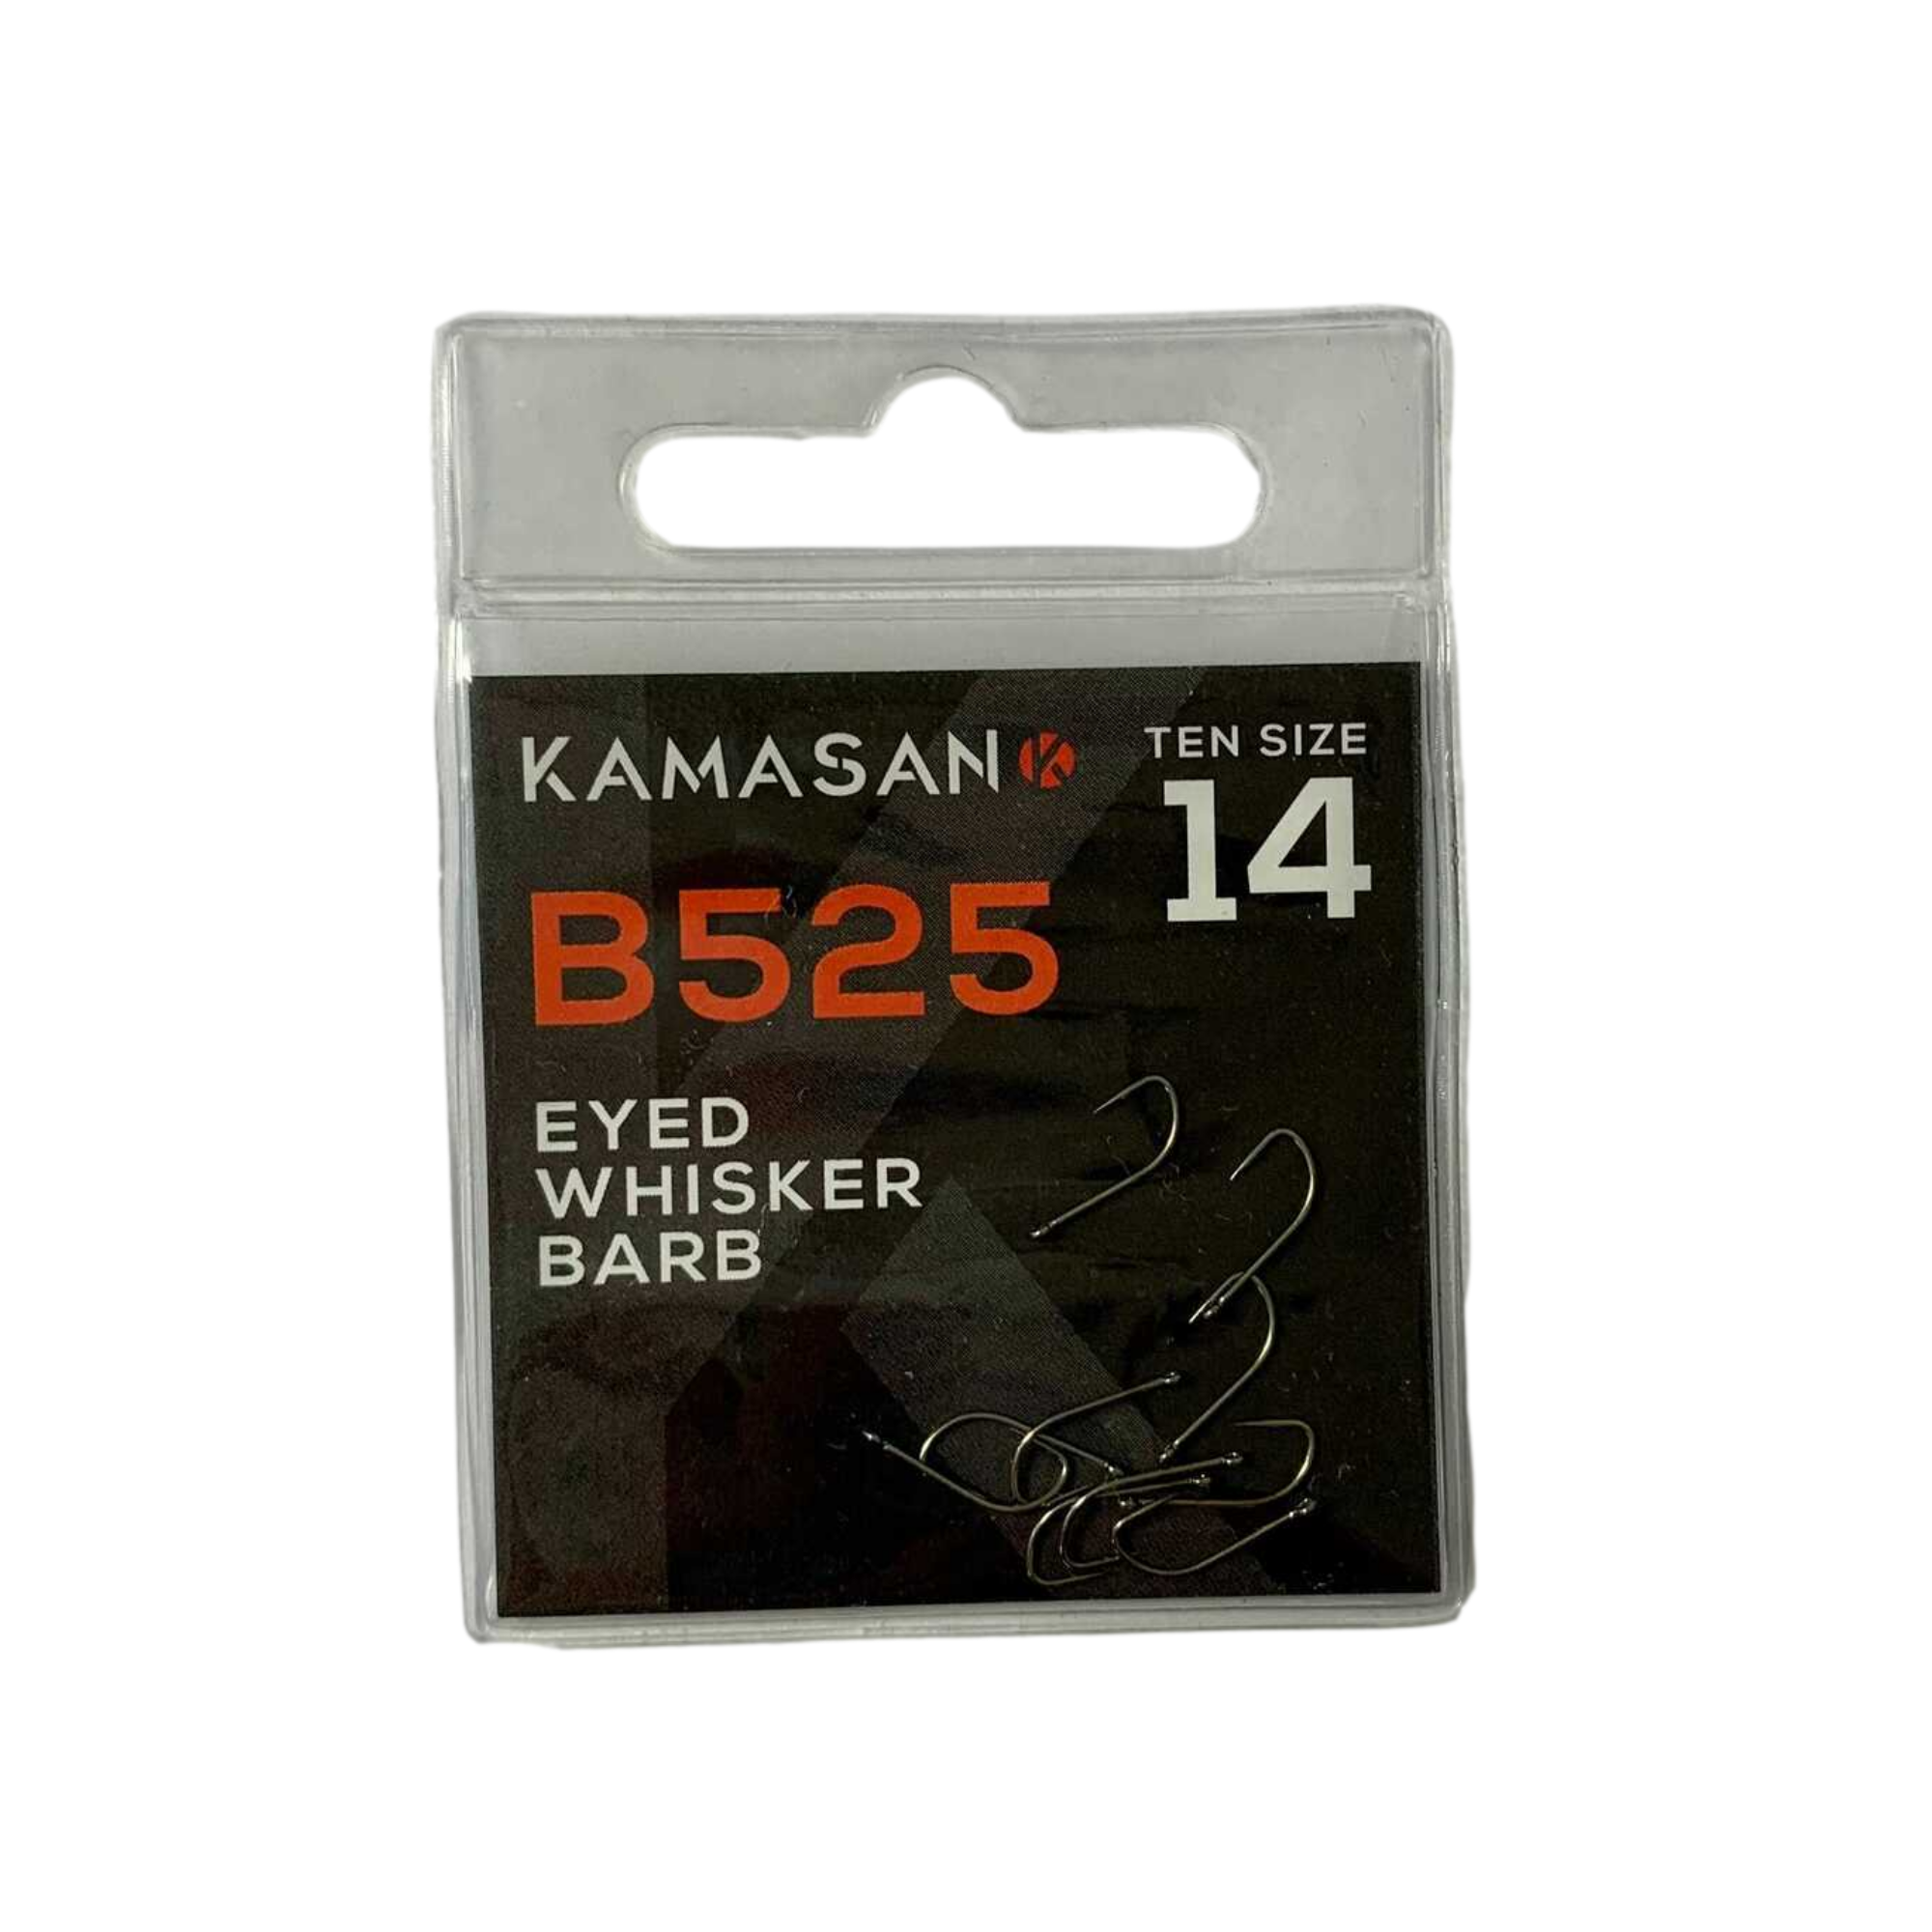 10 x Packs of 10 Kamasan B525 Eyed Whisker Barb Hooks Size 14 